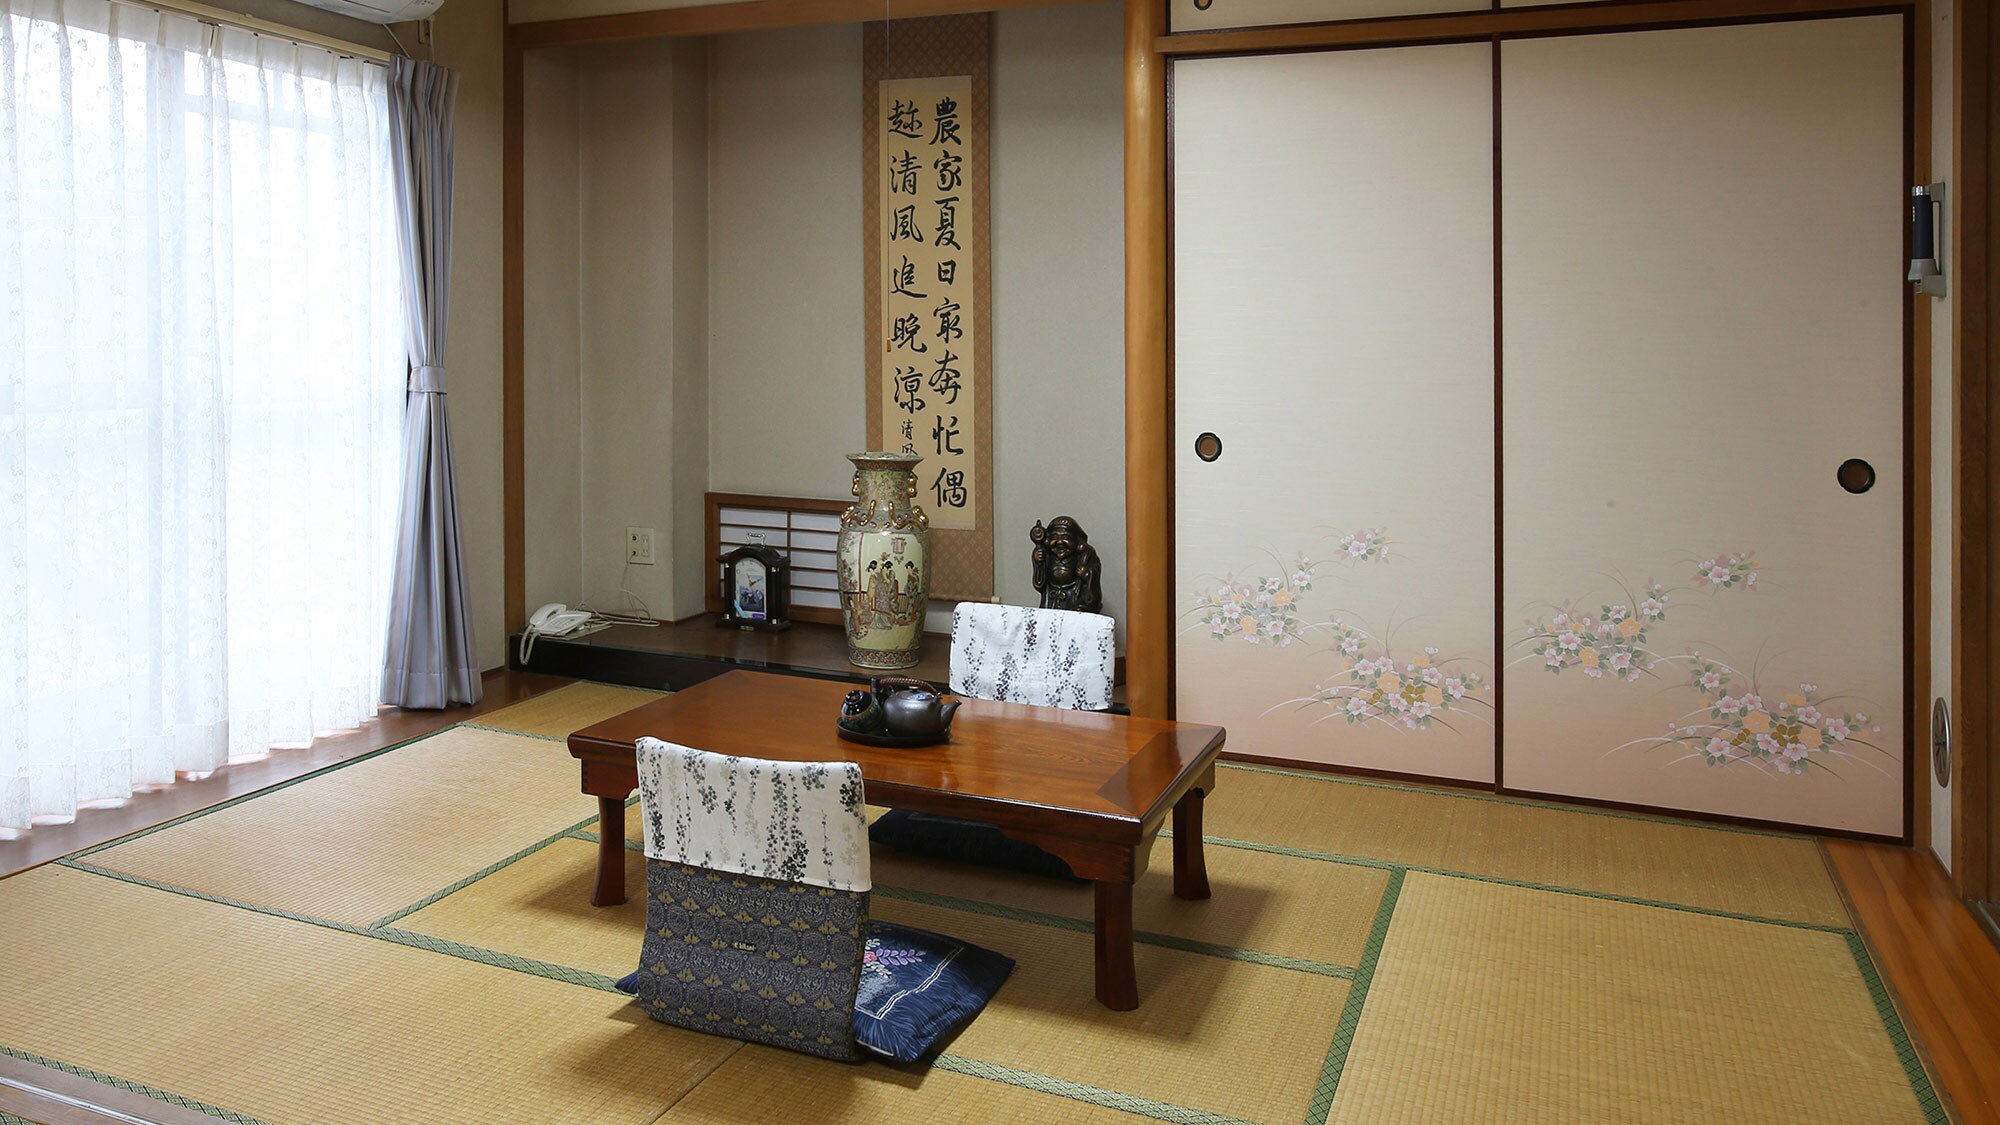 ・ Japanese-style room 12 tatami mats